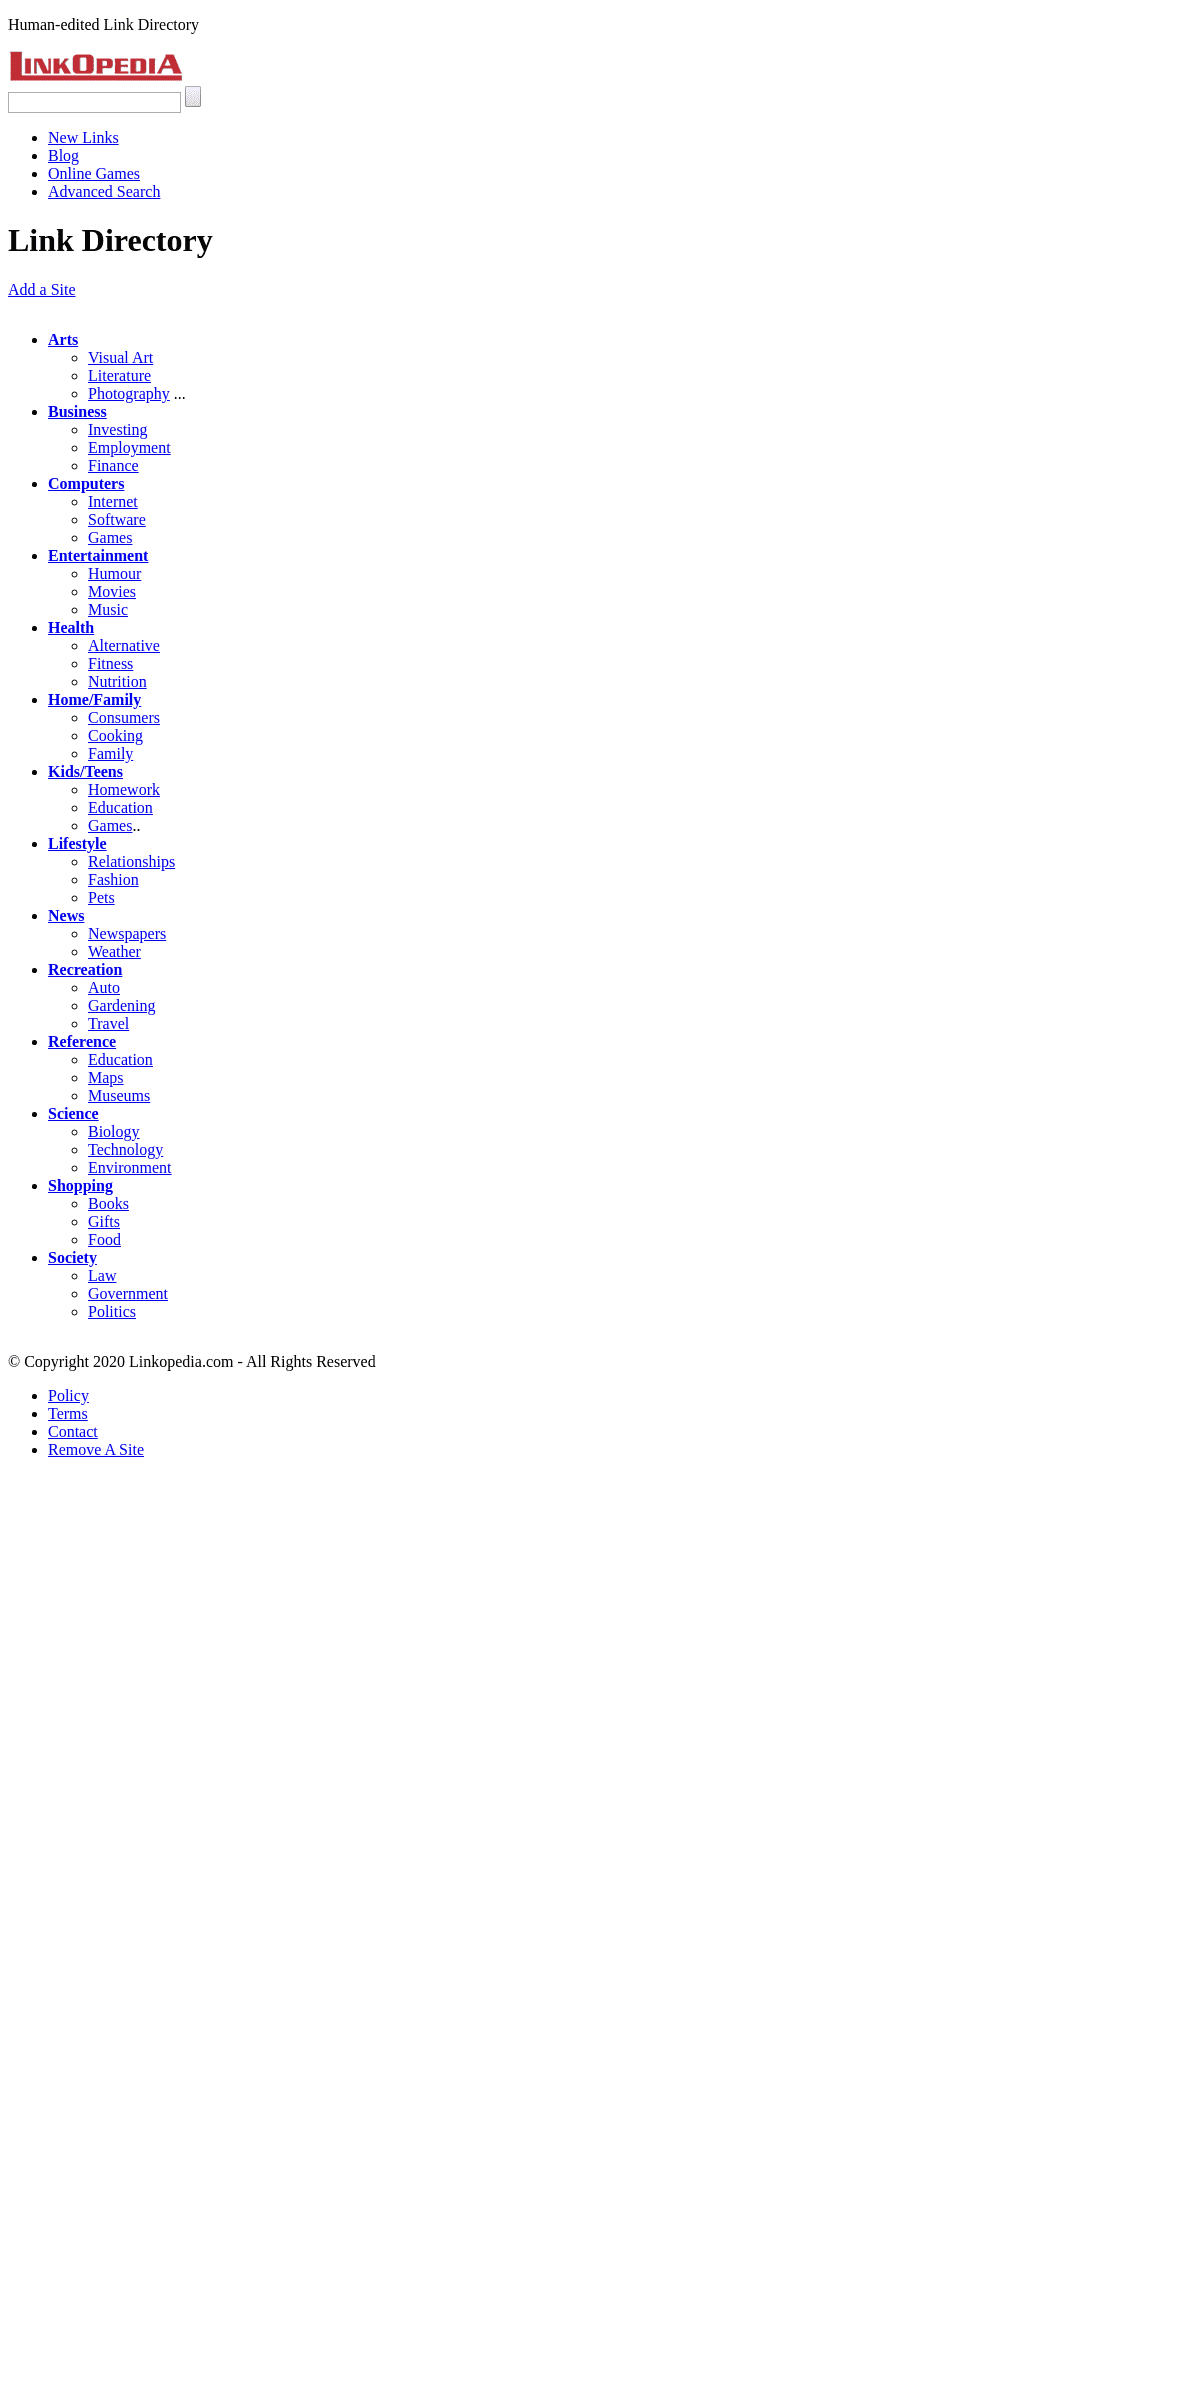 A complete backup of linkopedia.com